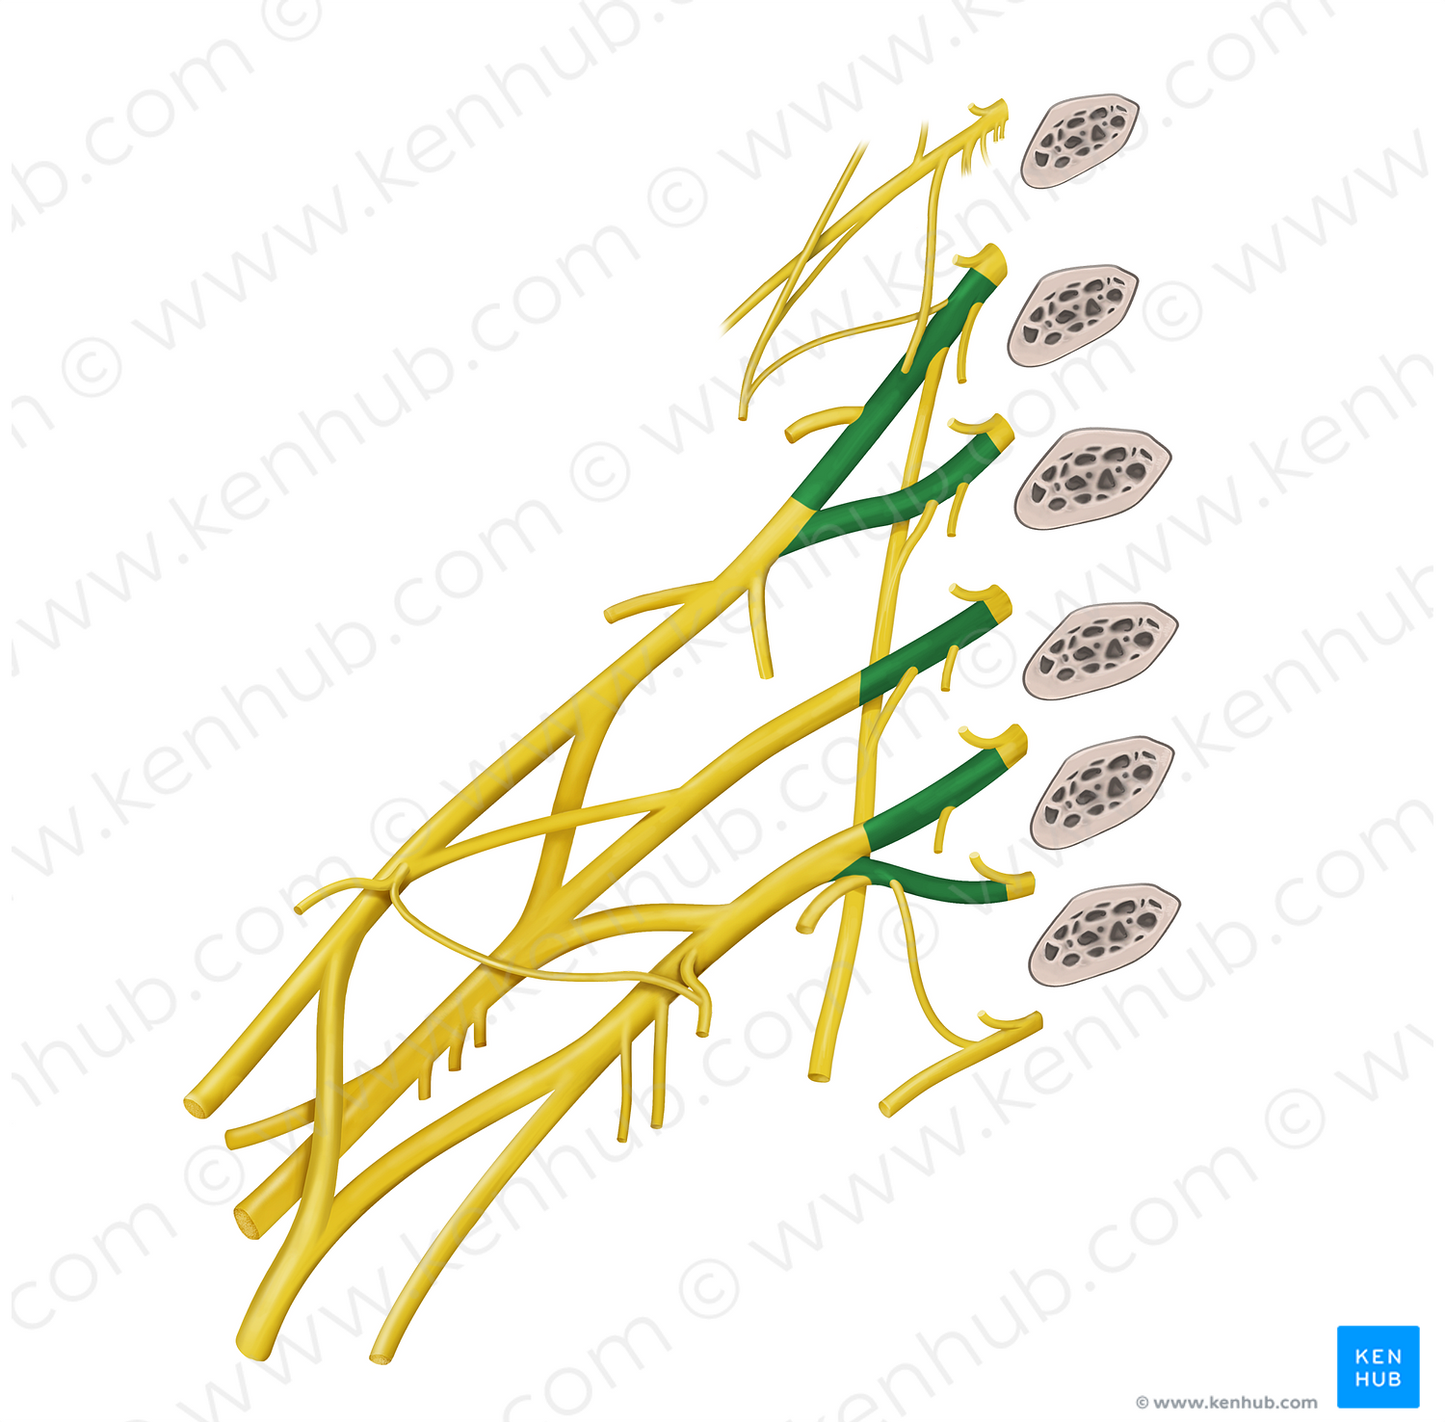 Roots of brachial plexus (#20584)